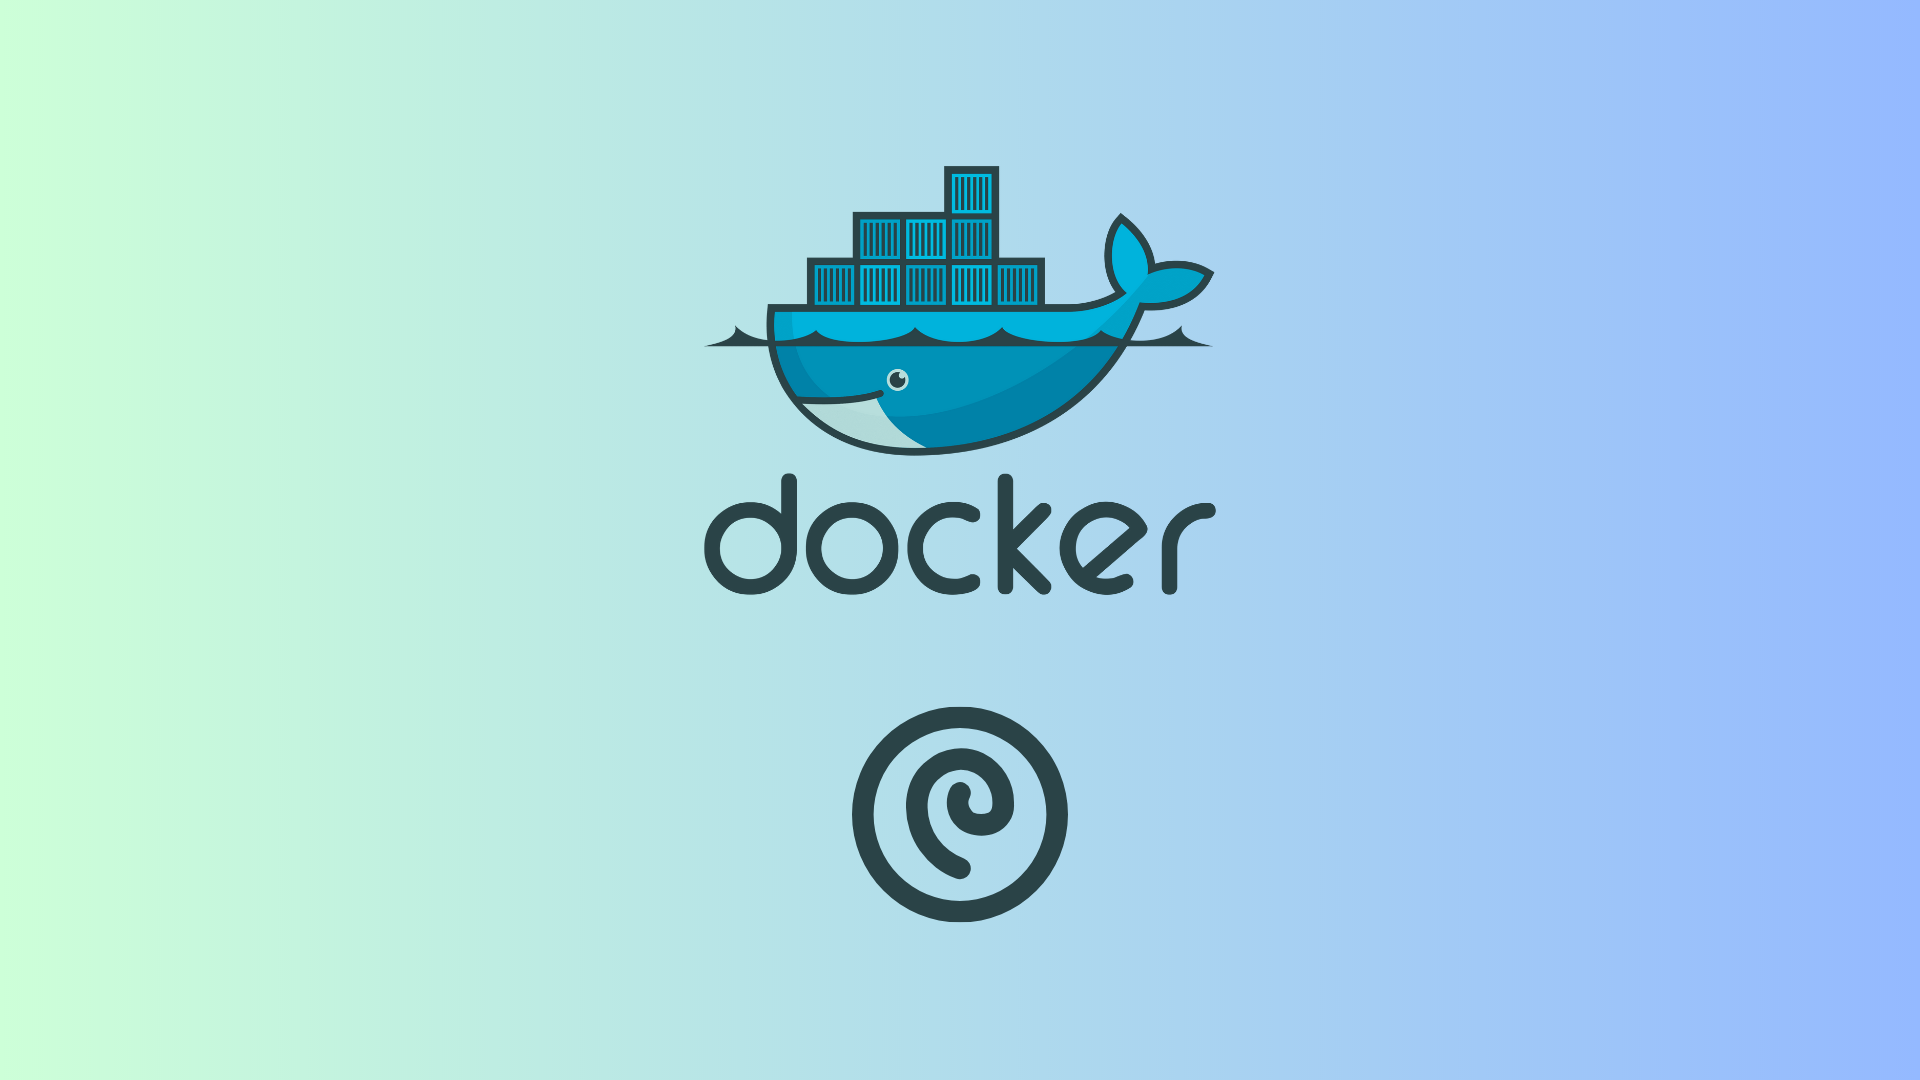 How to Install Docker on Debian